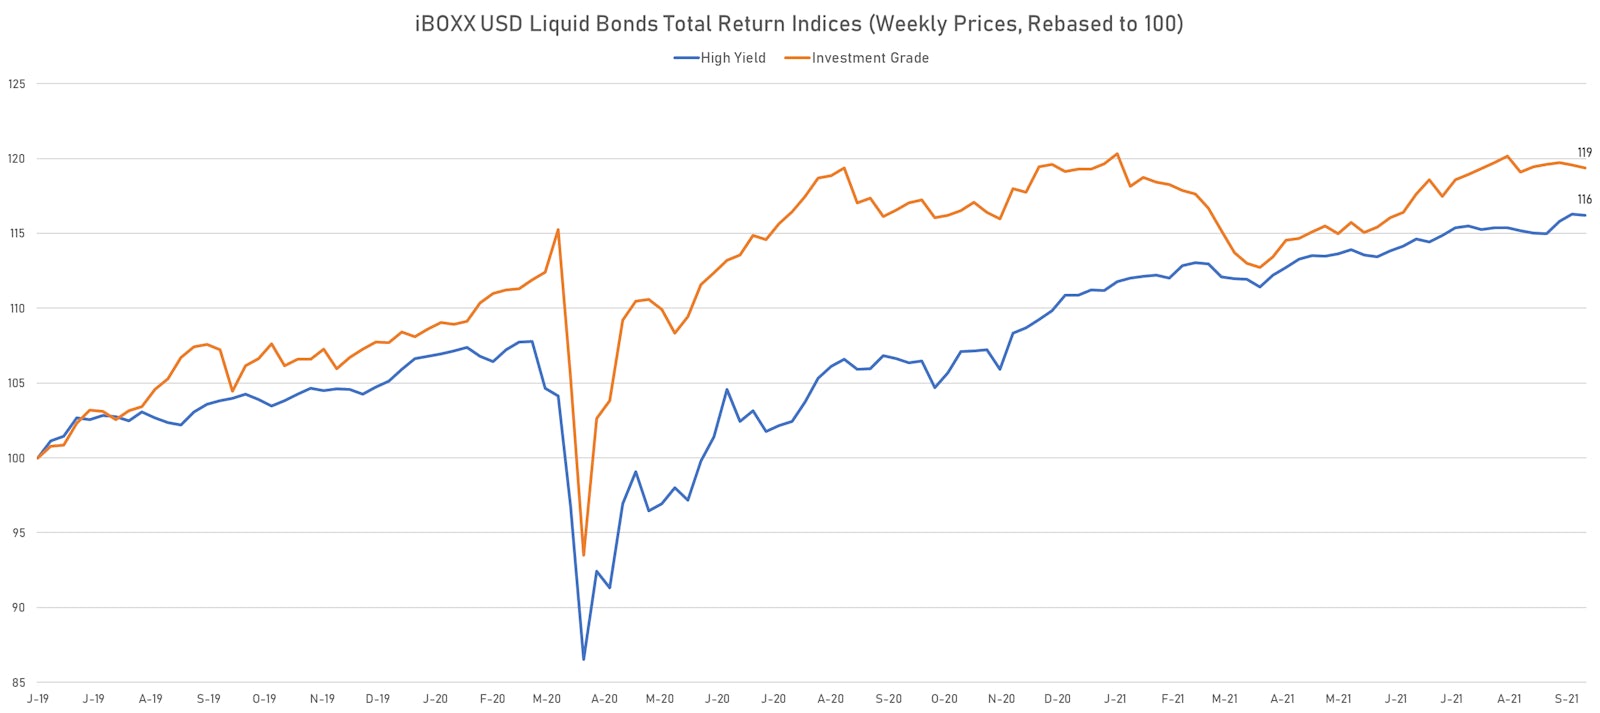 iBOXX USD Liquid Bonds Total Returns IG & HY Indices | Sources: ϕpost, Refinitiv data